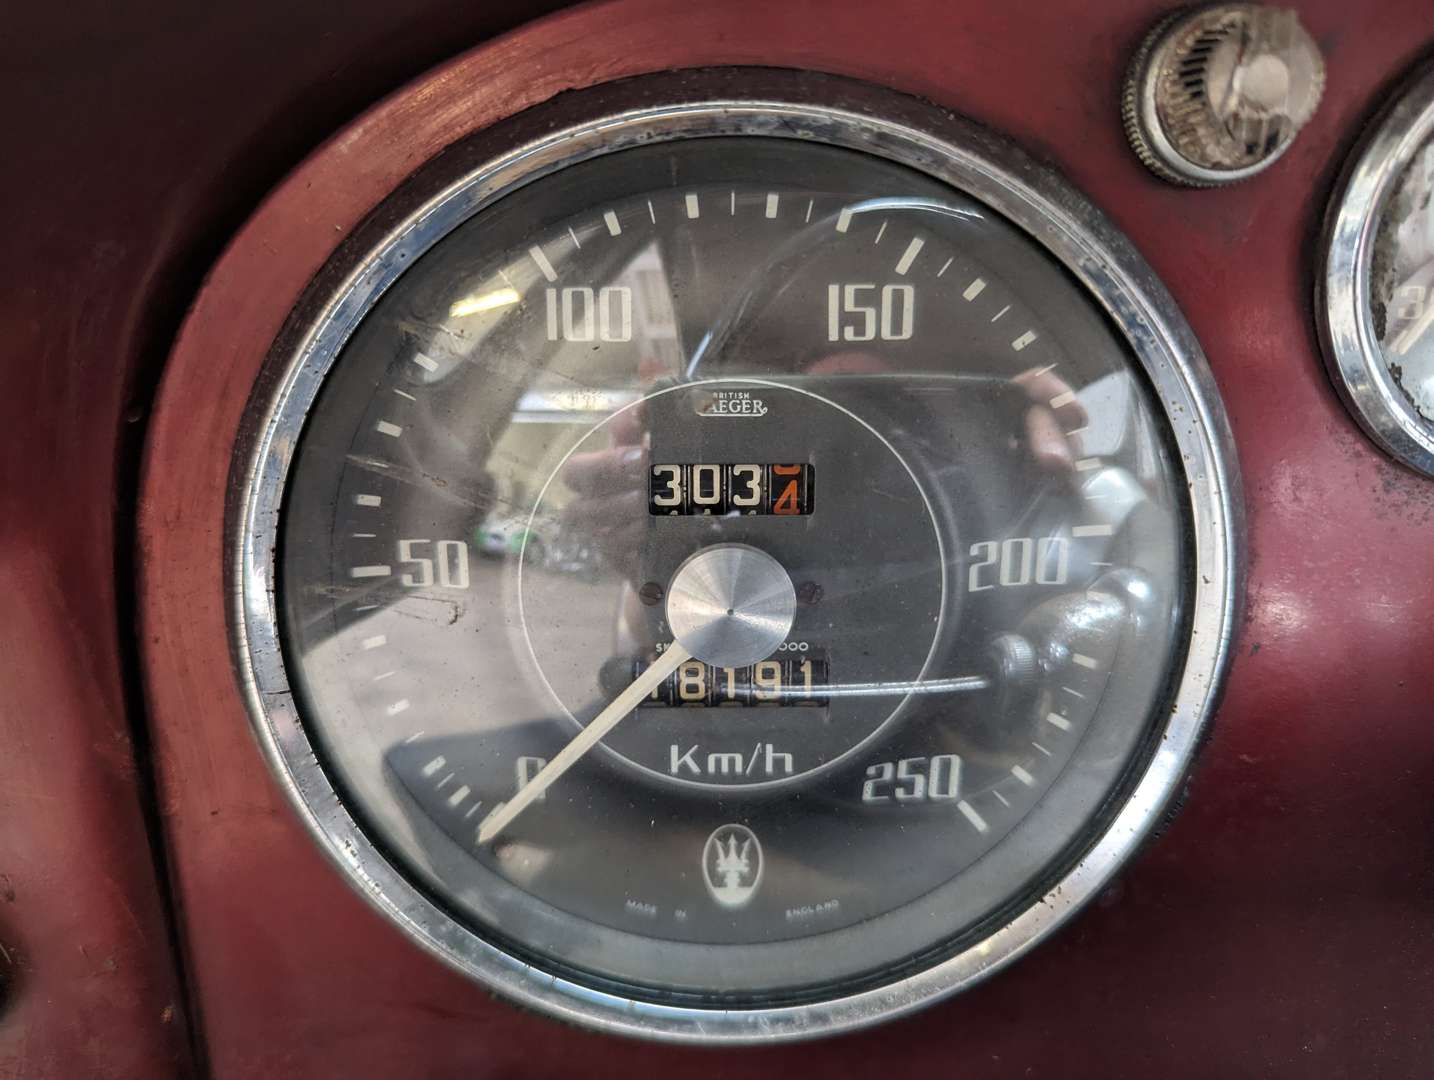 <p>1962 MASERATI 3500 GT LHD</p>